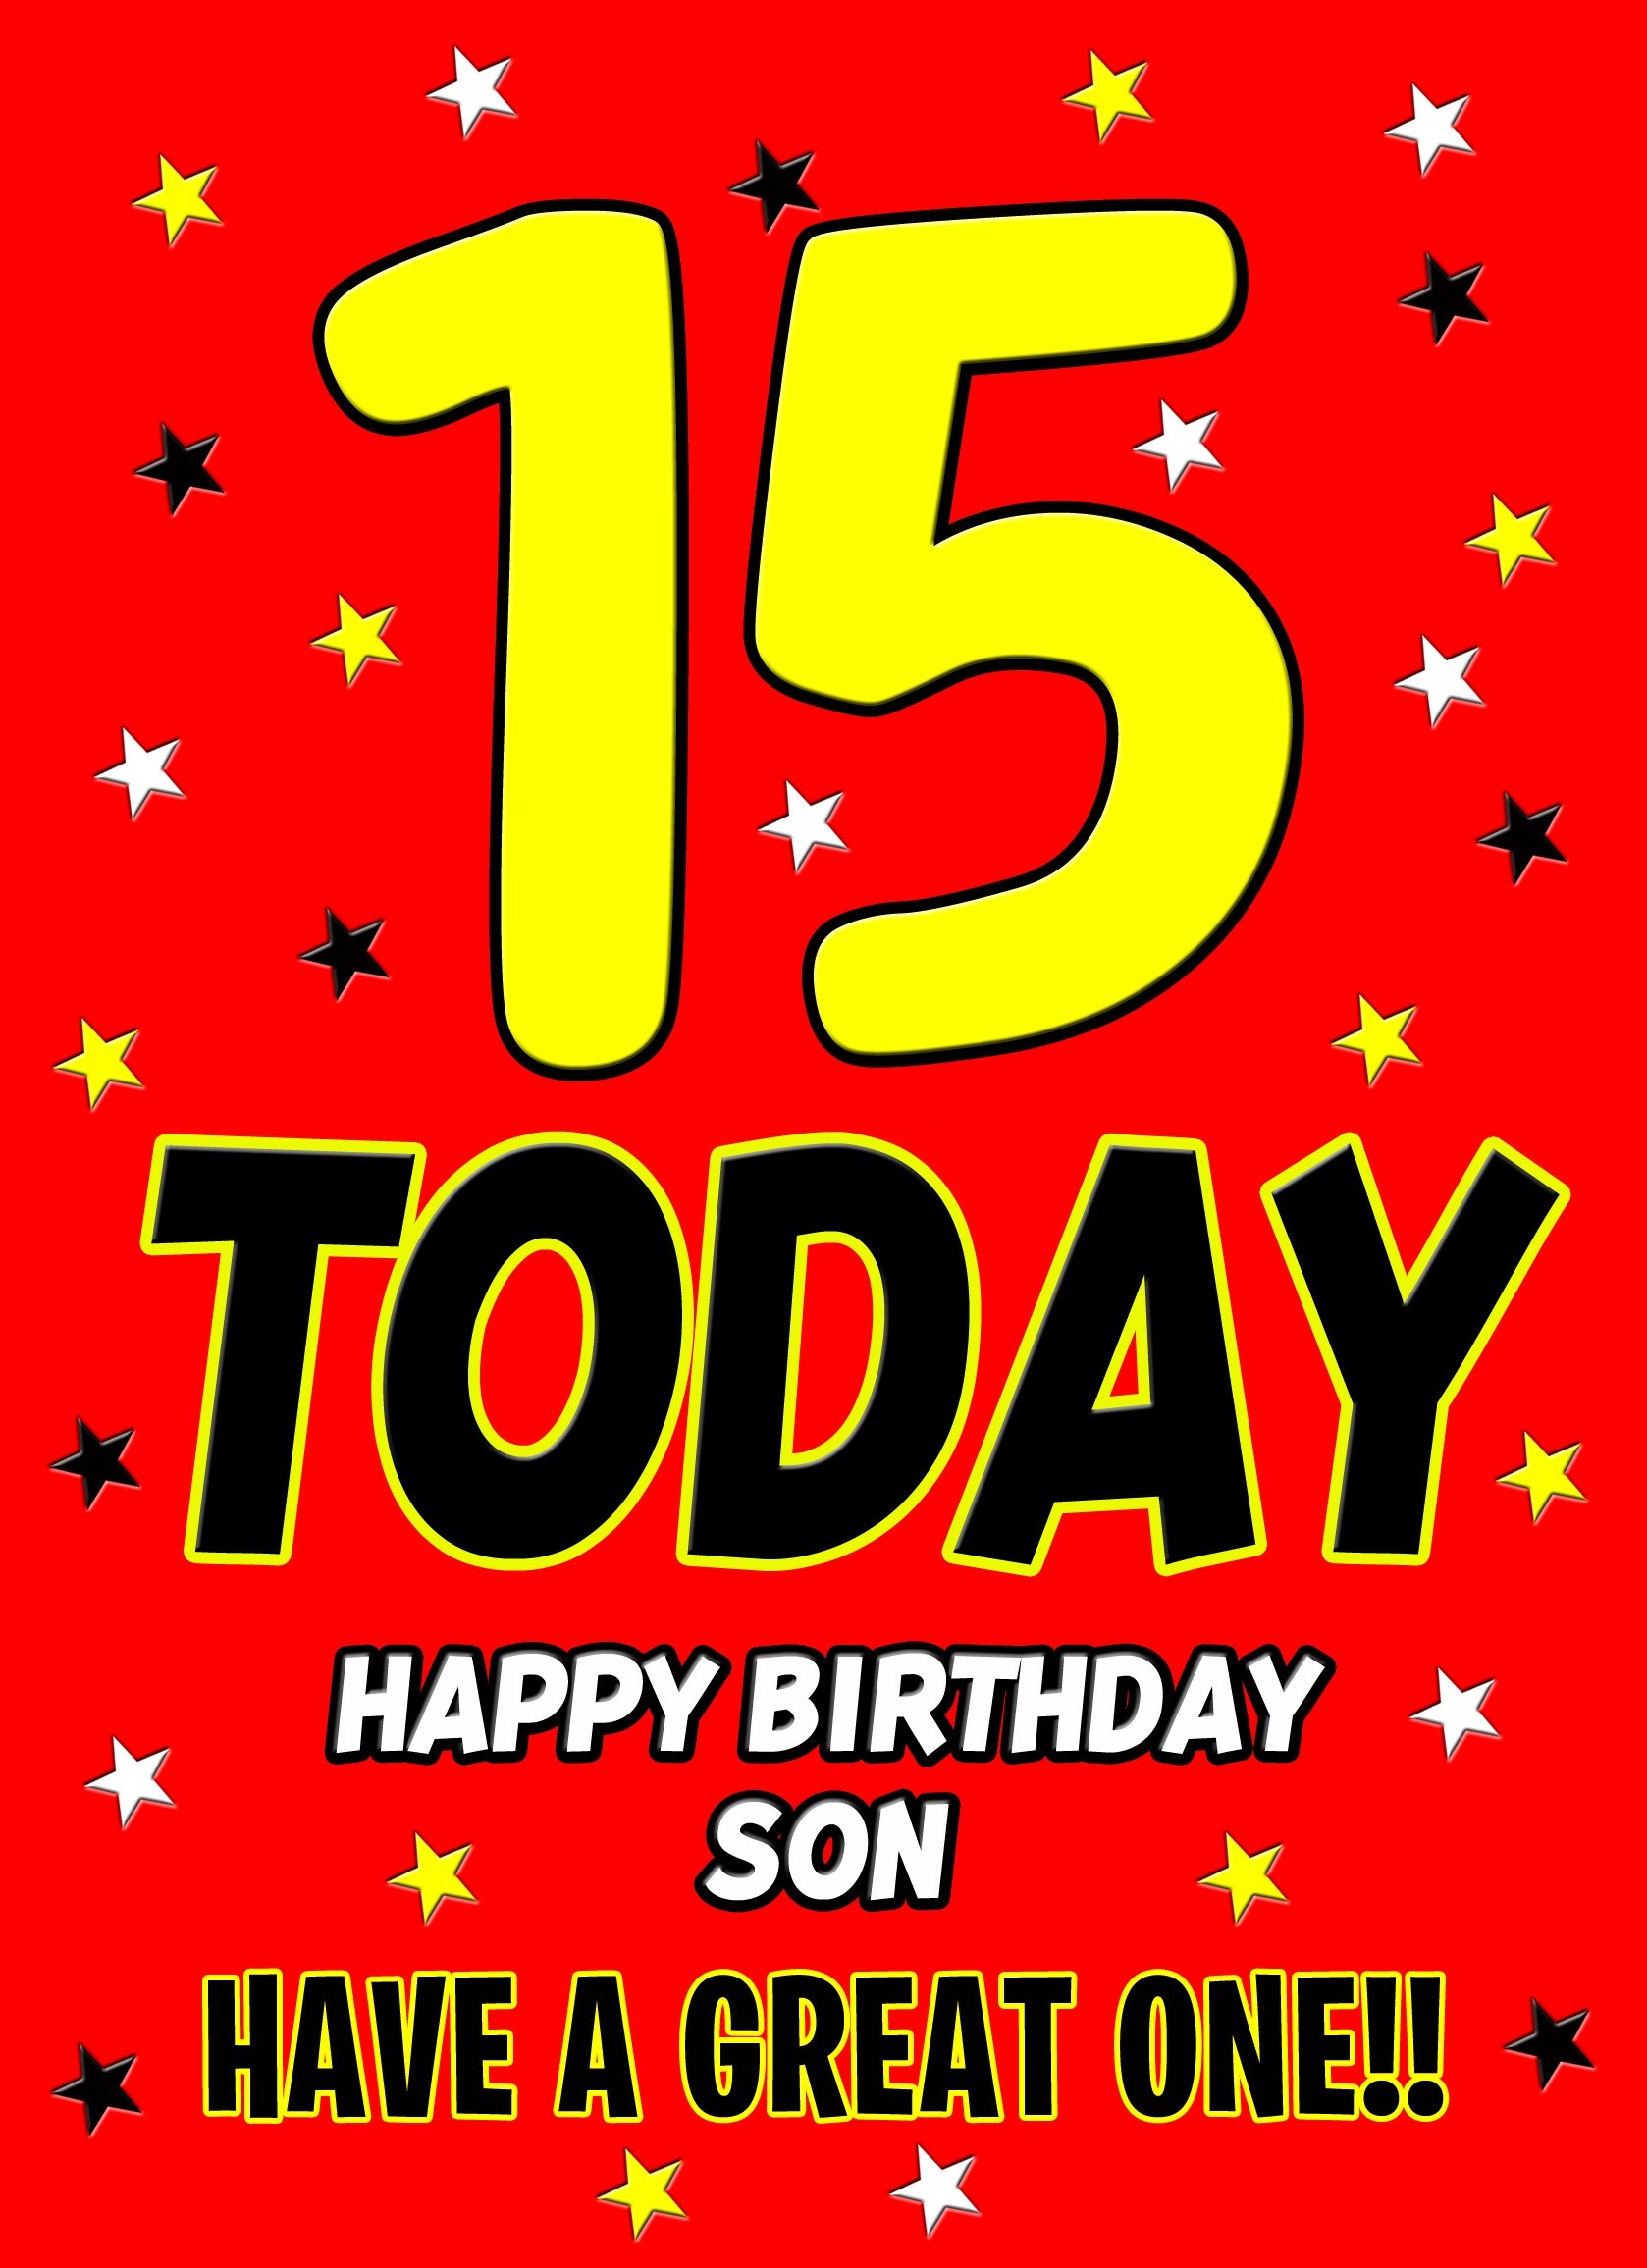 15 Today Birthday Card (Son)